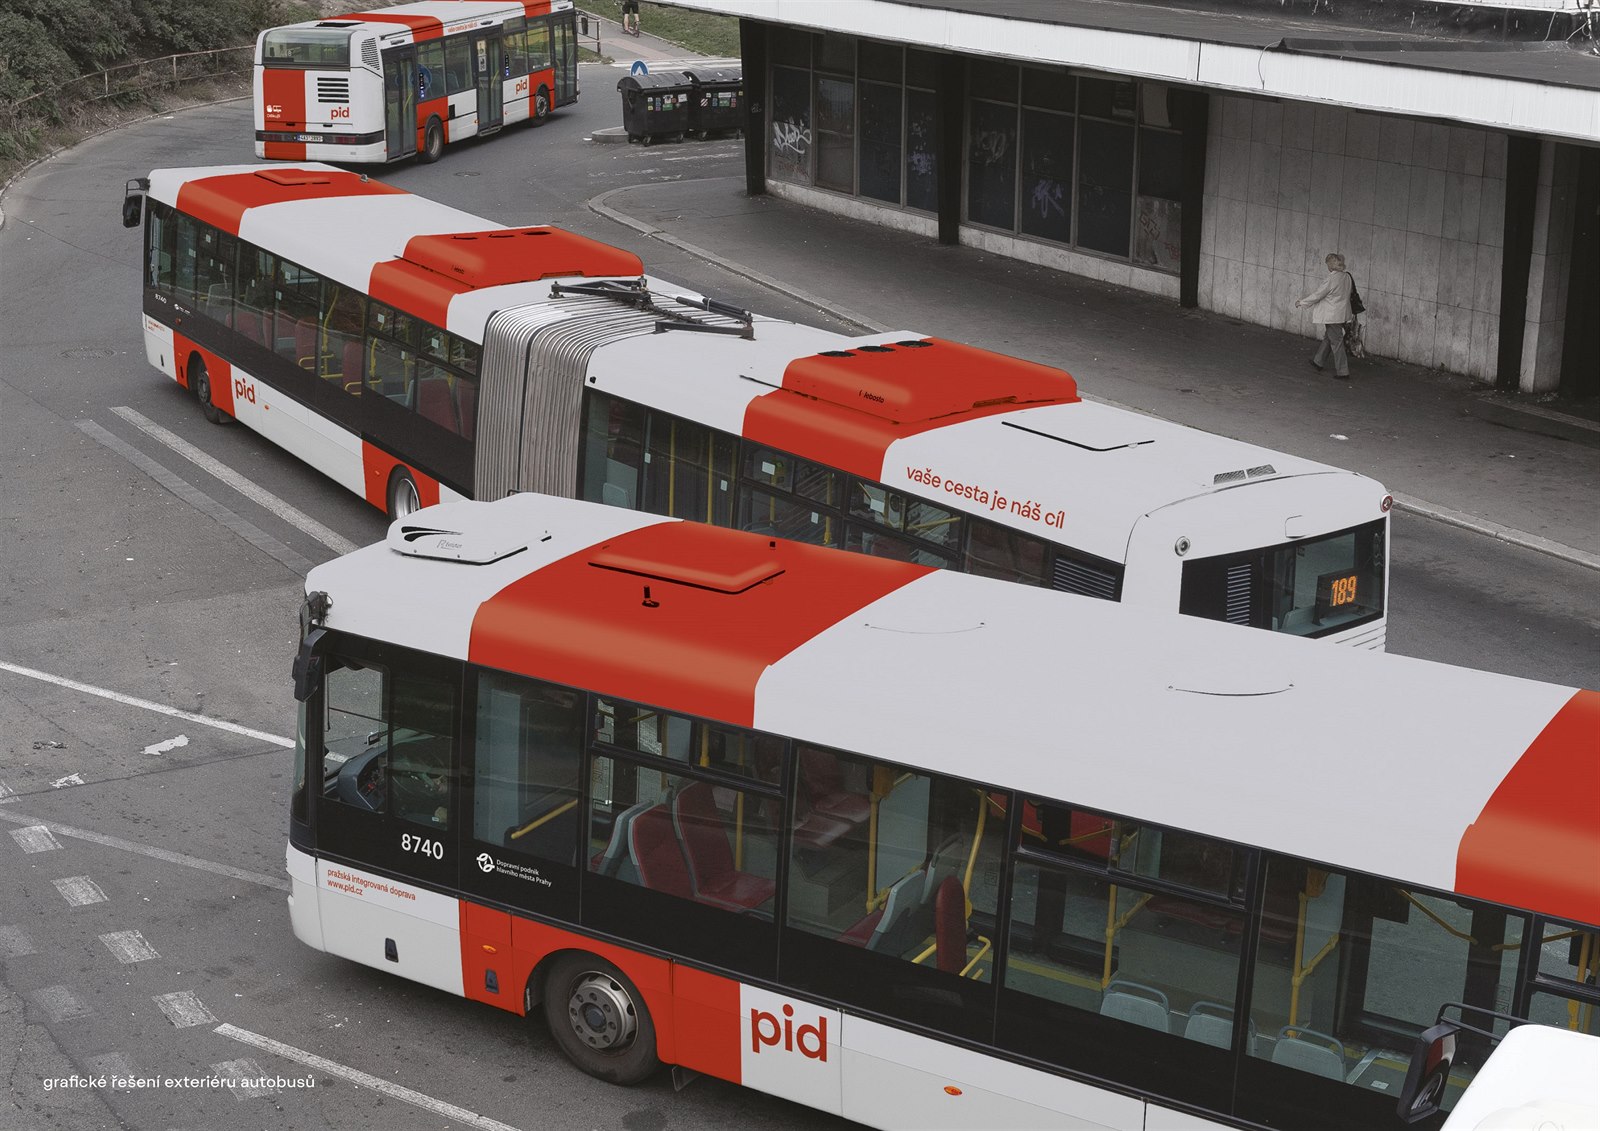 New color scheme for Prague's public transport vehicles via superlative.works